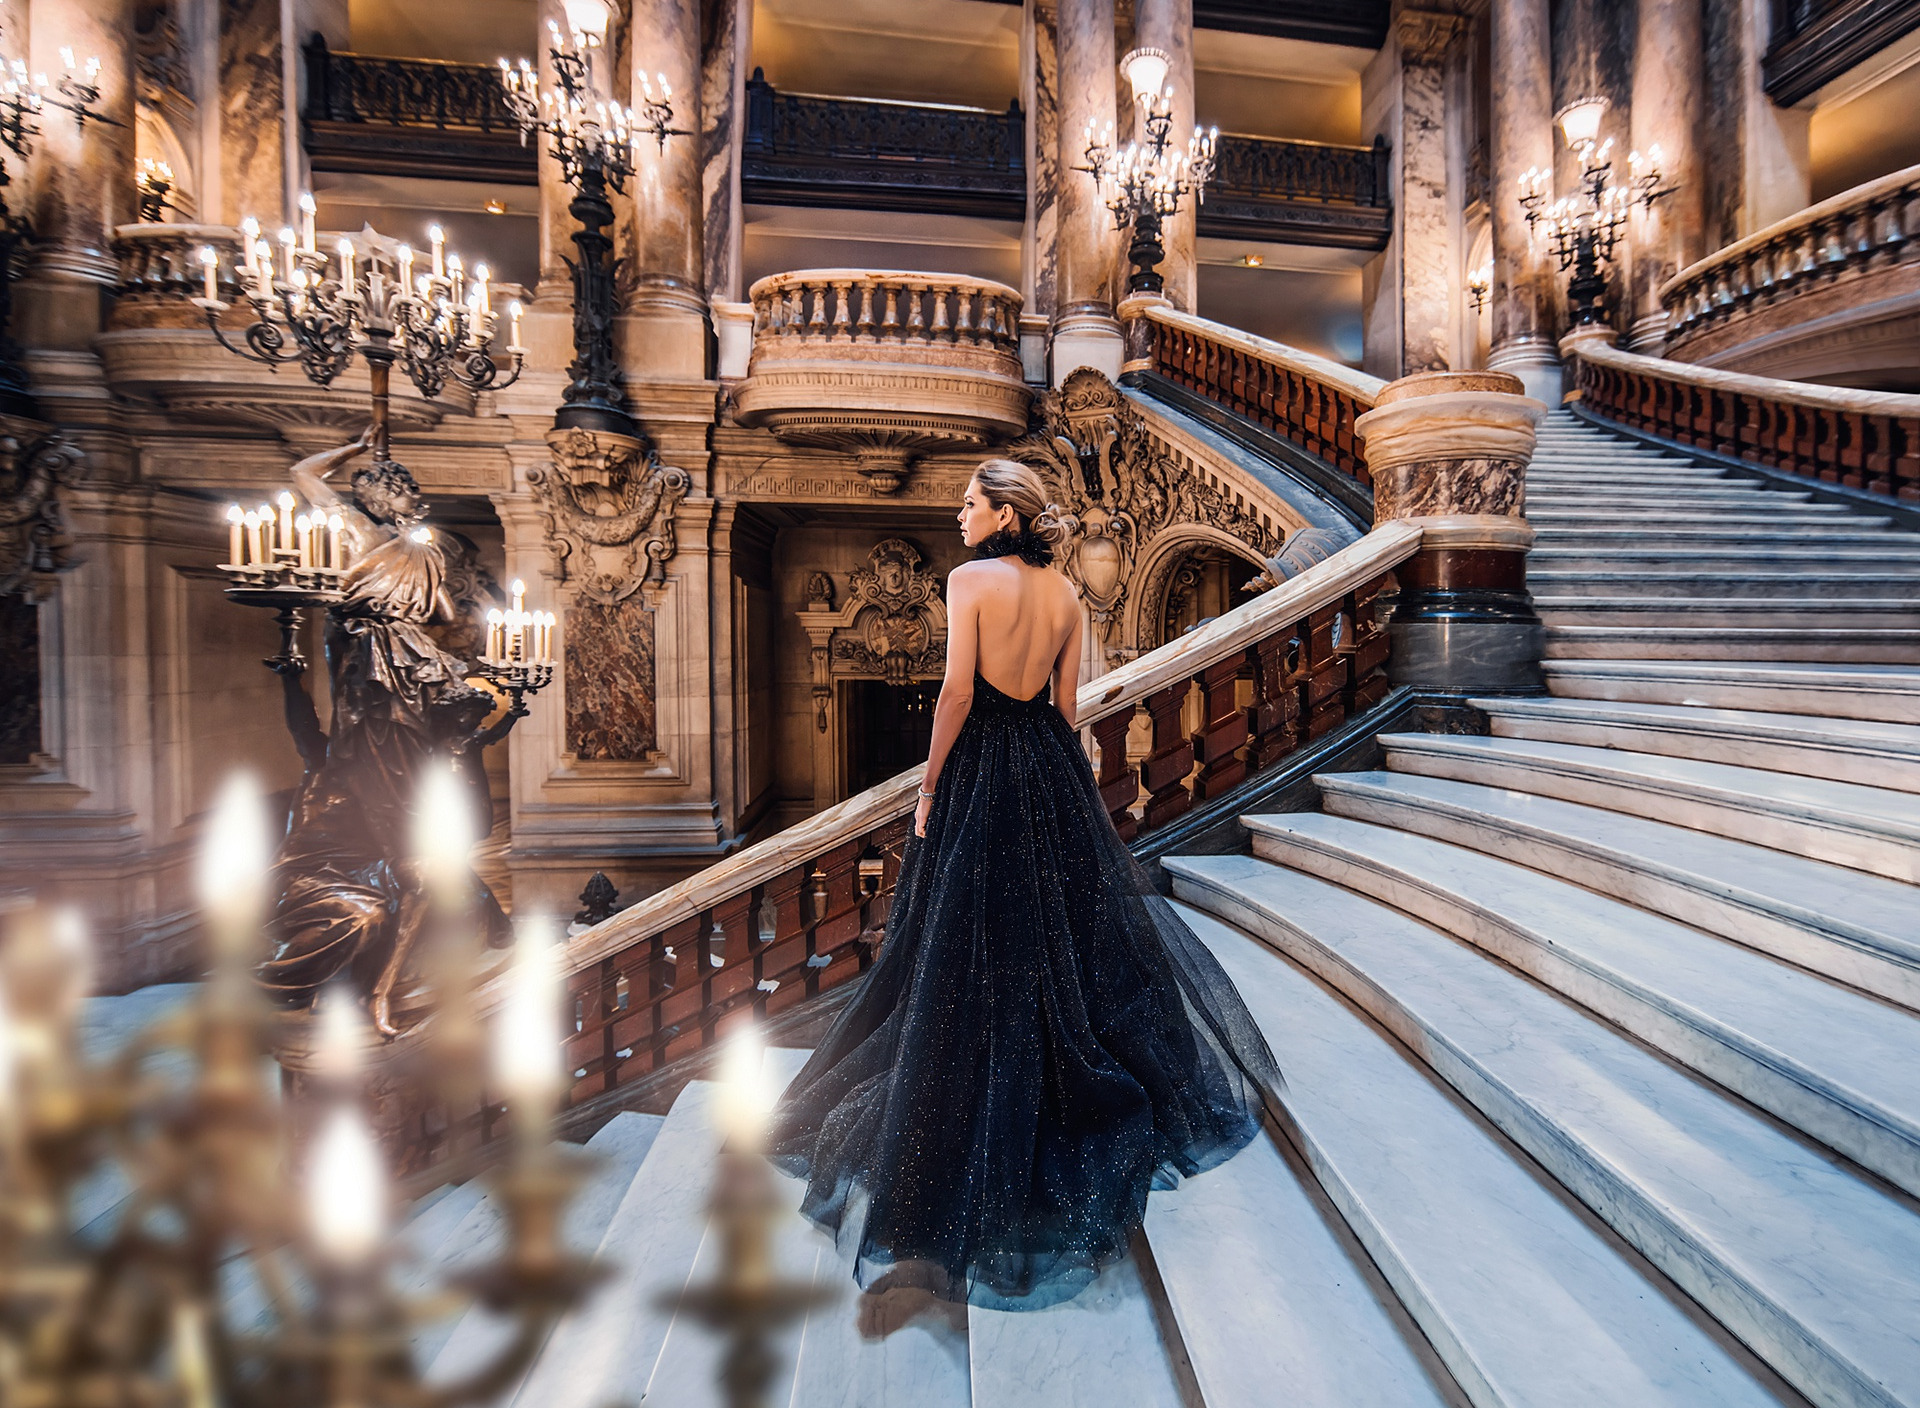 Фото На Лестнице Девушки В Платье